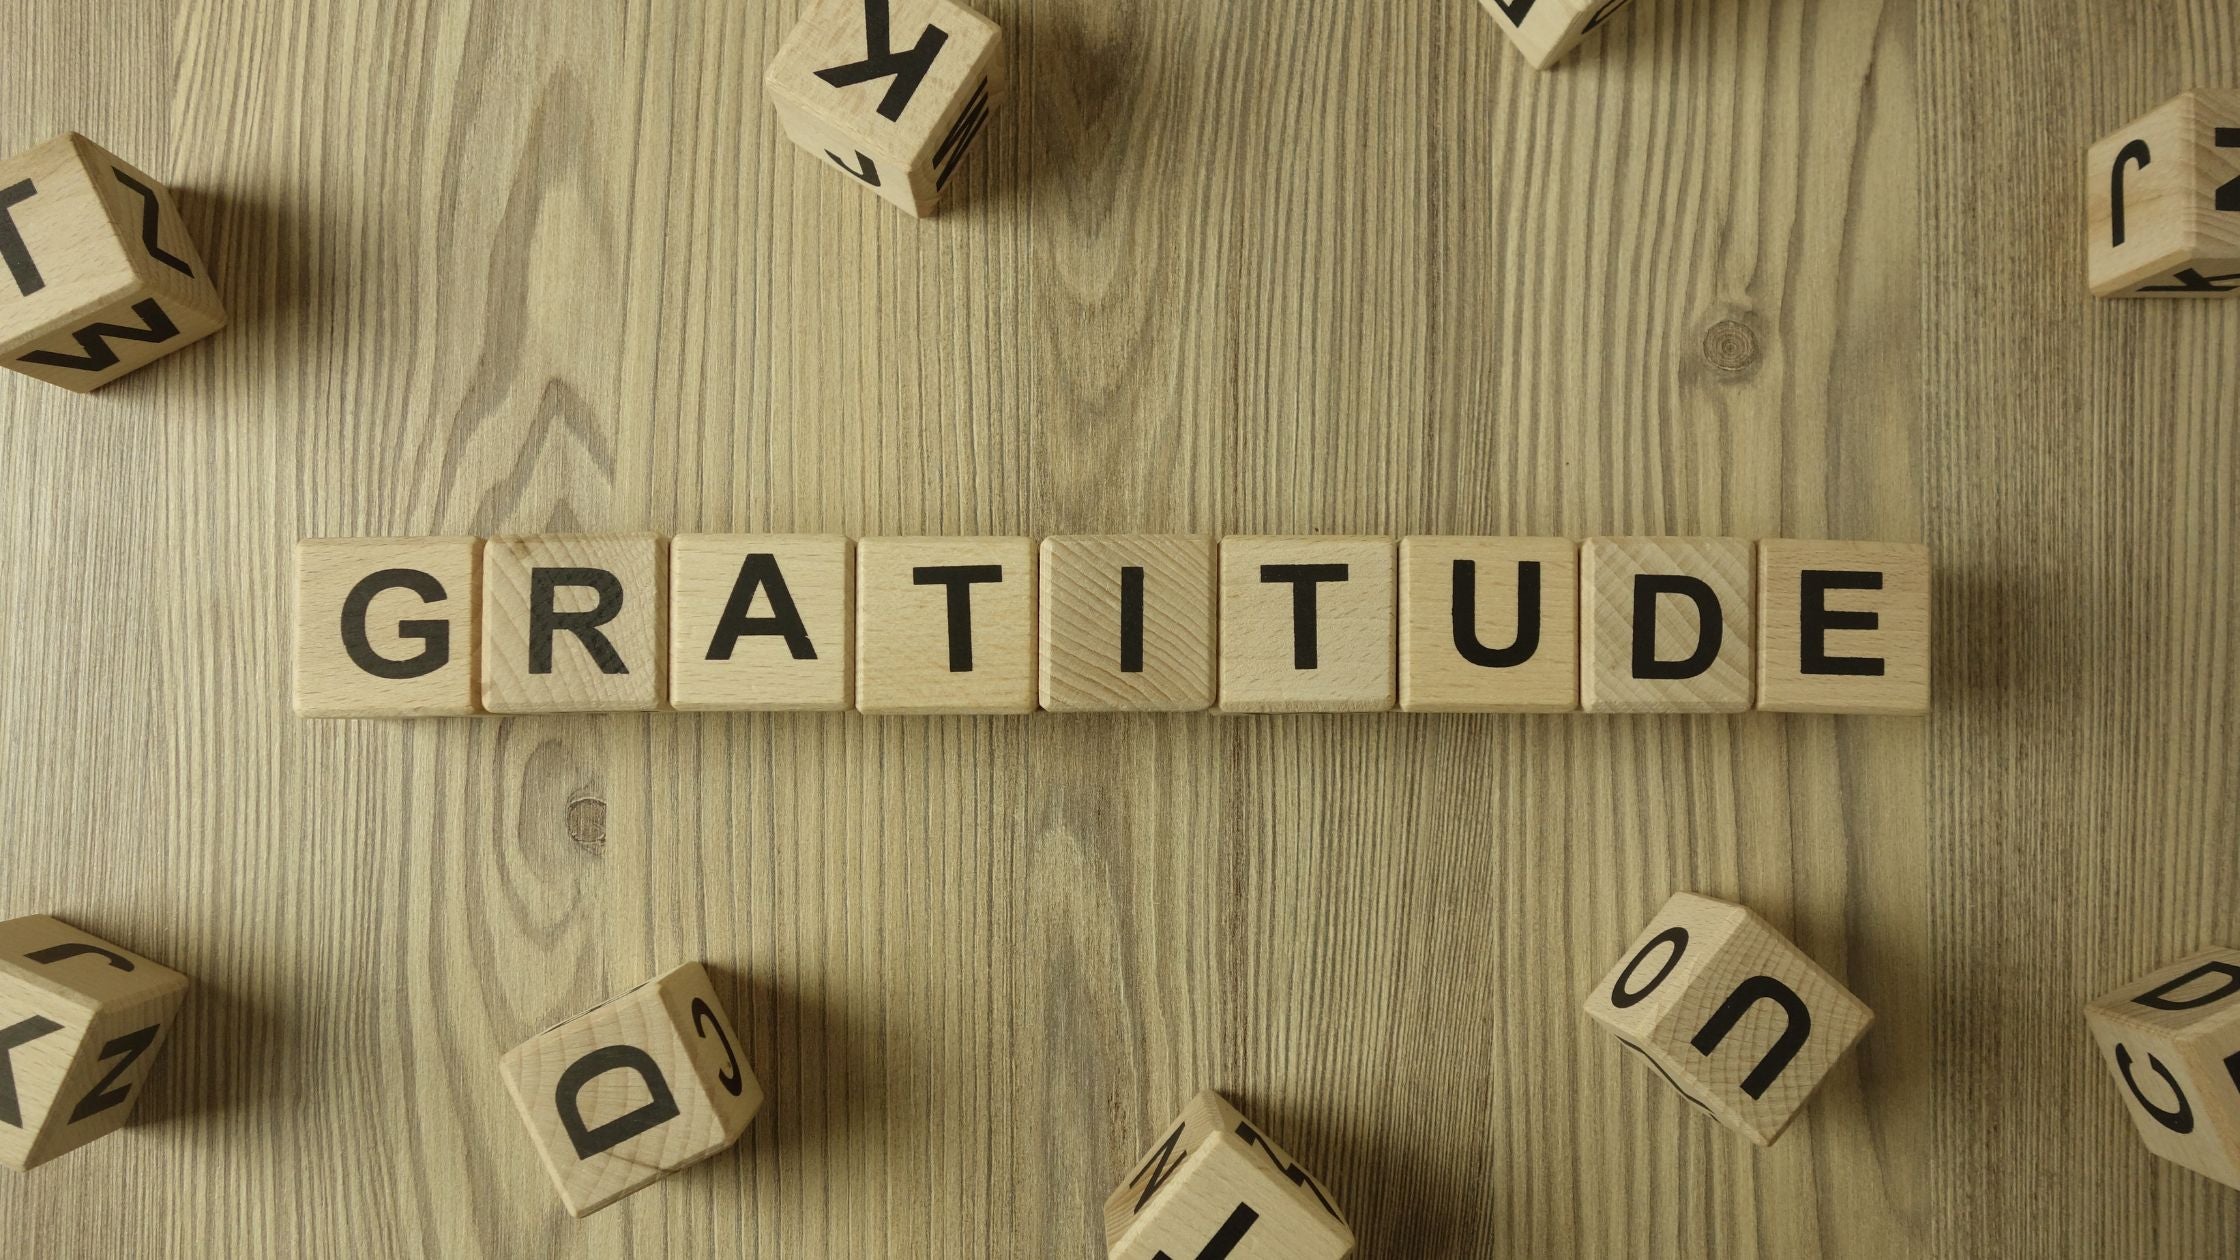 An Attitude of Gratitude | Happy Thanksgiving Day